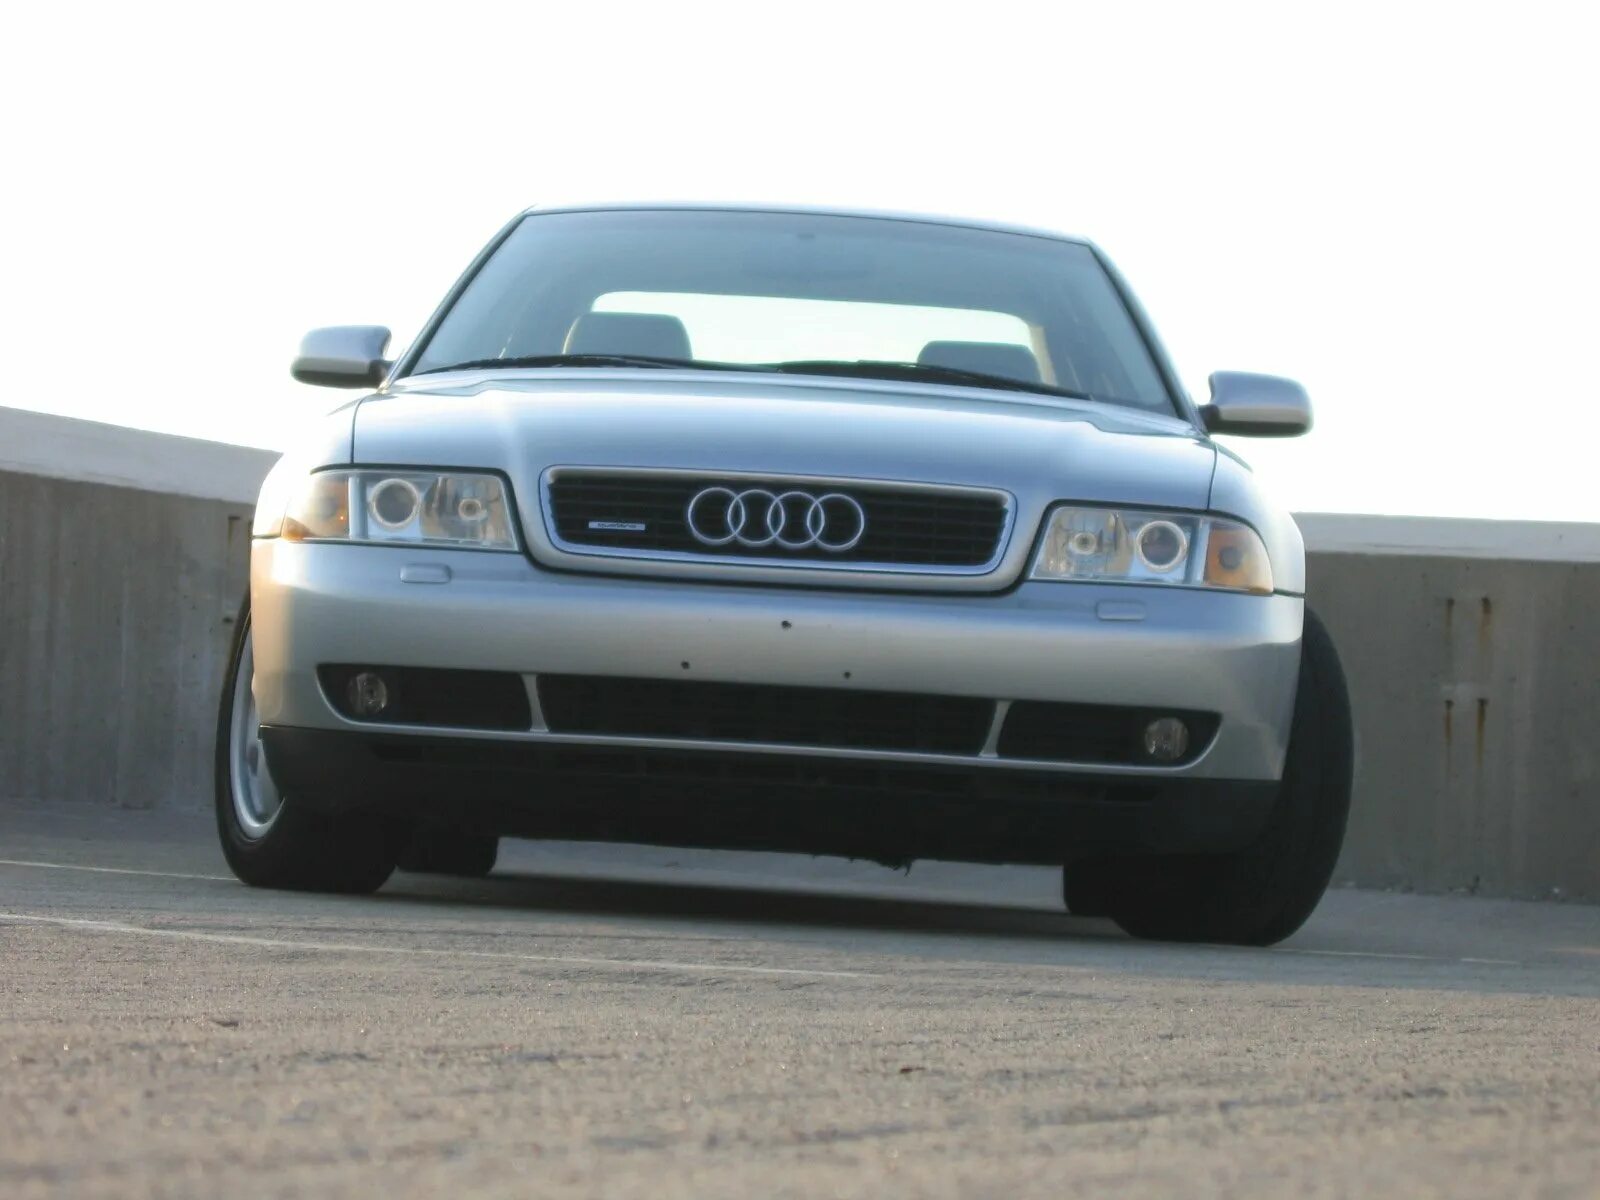 Купить ауди 1999. Audi a4 1999. Audi a4 1.8 Turbo quattro. Audi a4 1999 год. Ауди а4 1999.